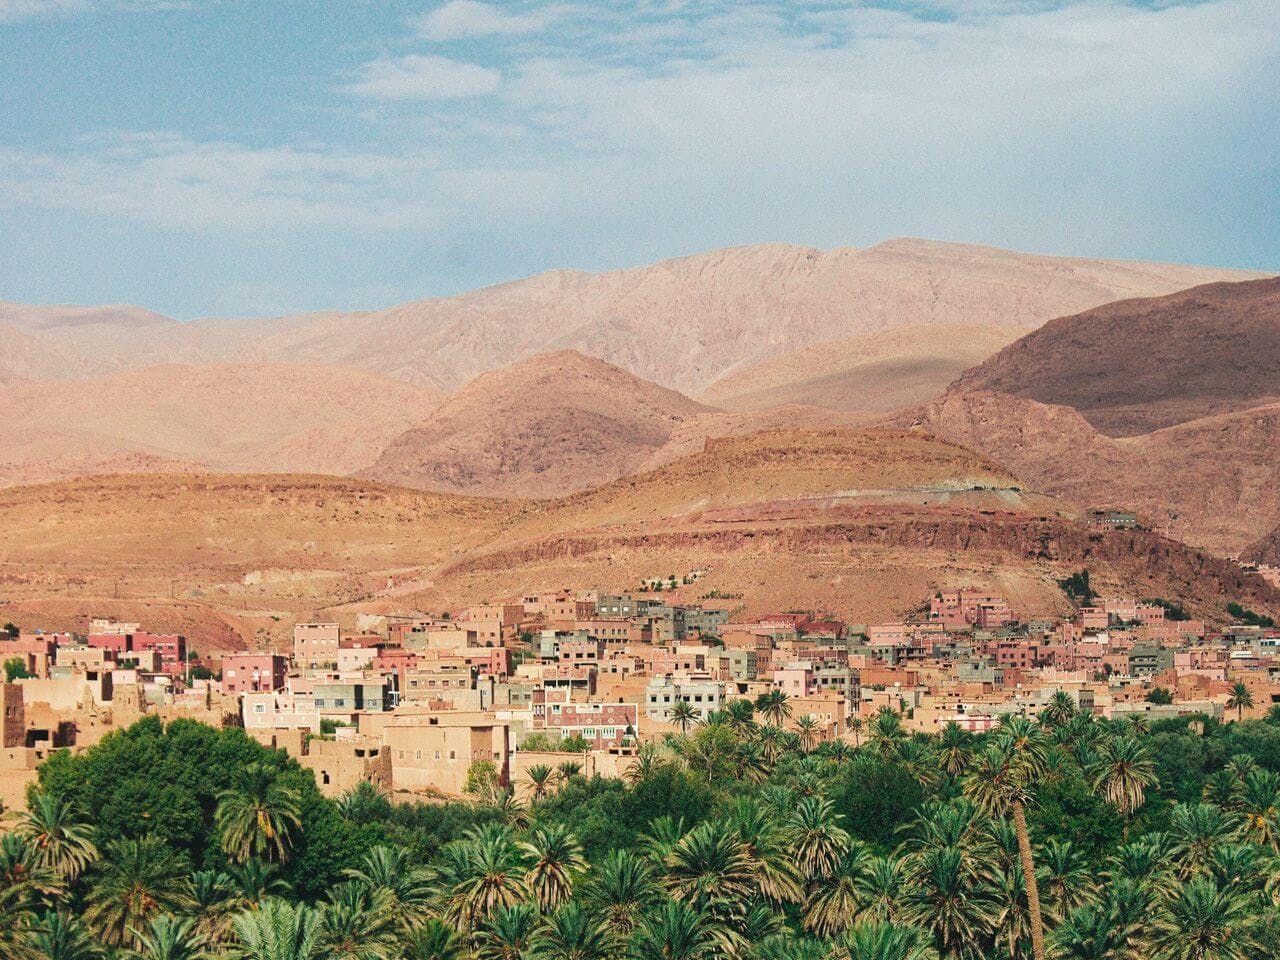 Tamnougalt village, Morocco 